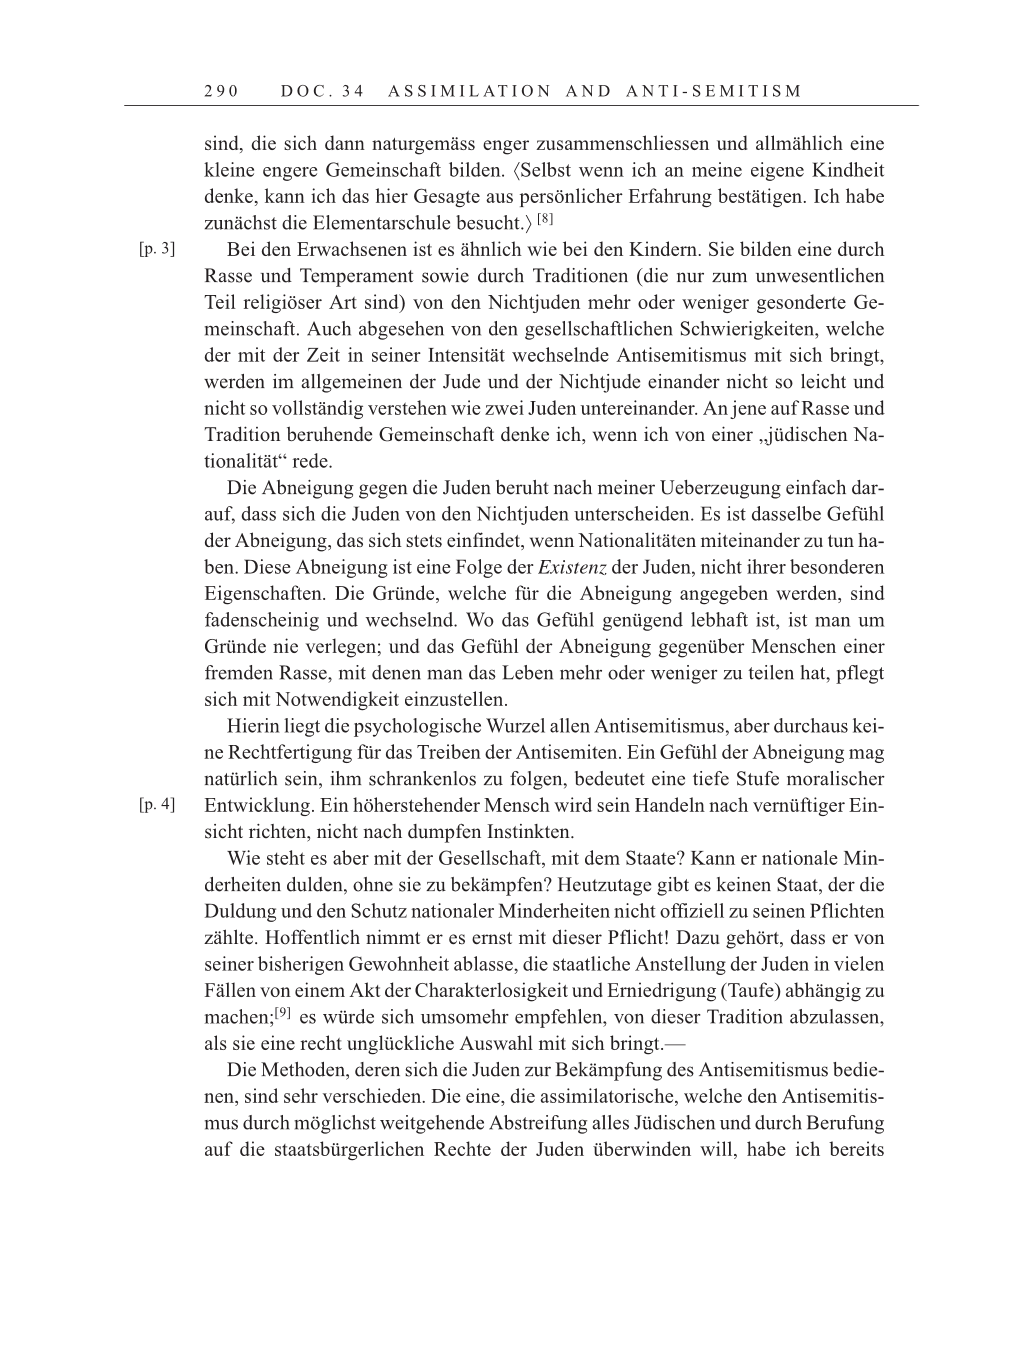 Volume 7: The Berlin Years: Writings, 1918-1921 page 290